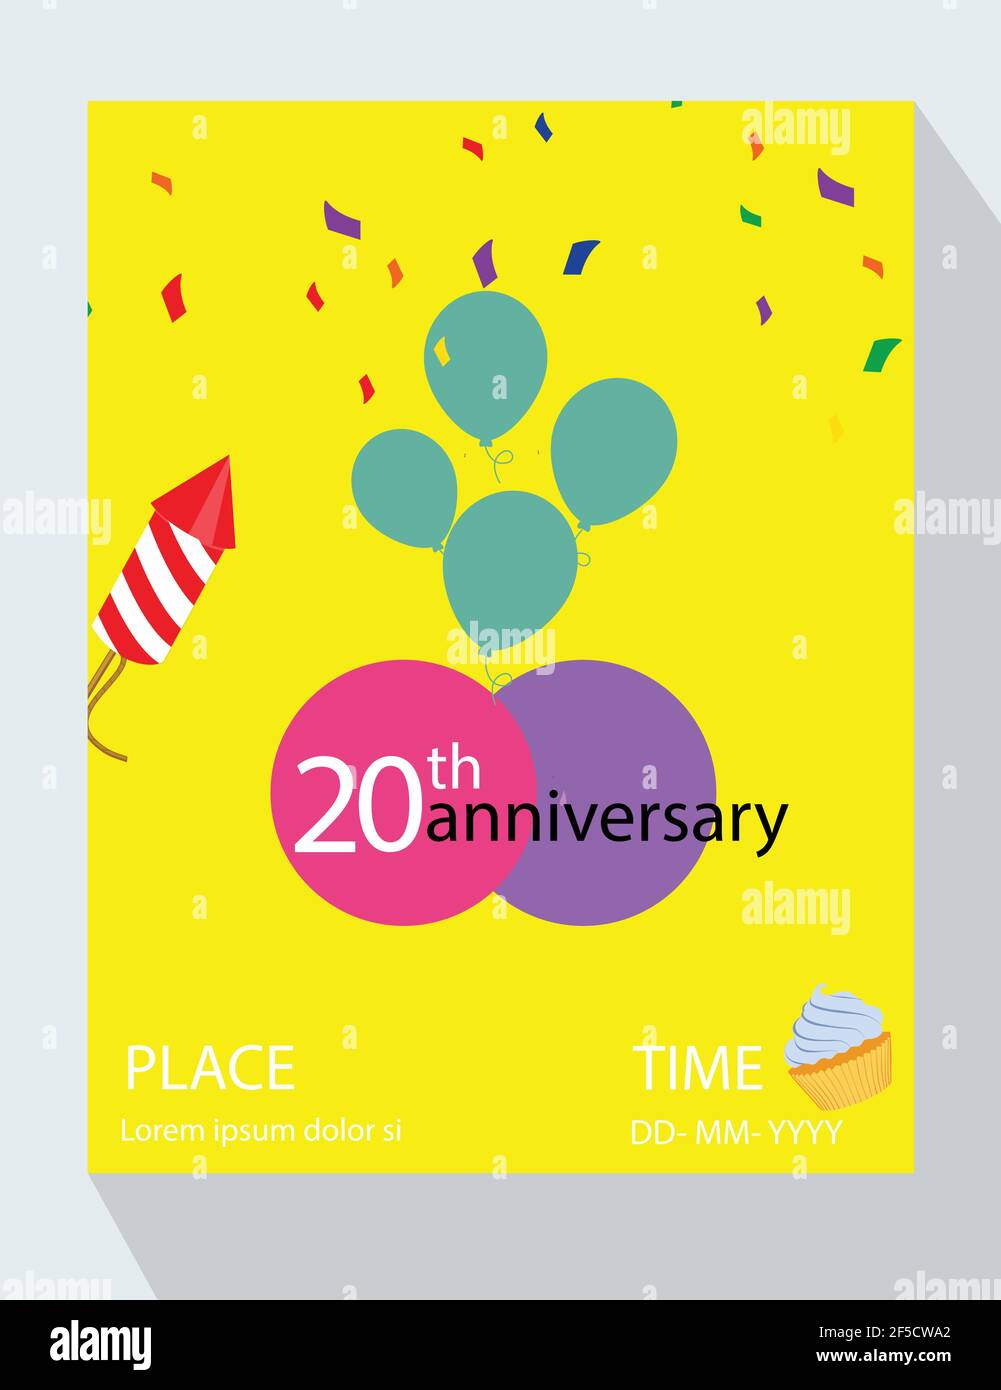 Birthday party invitation card. You are invited! Happy 20th birthday anniversary! Stock Vector